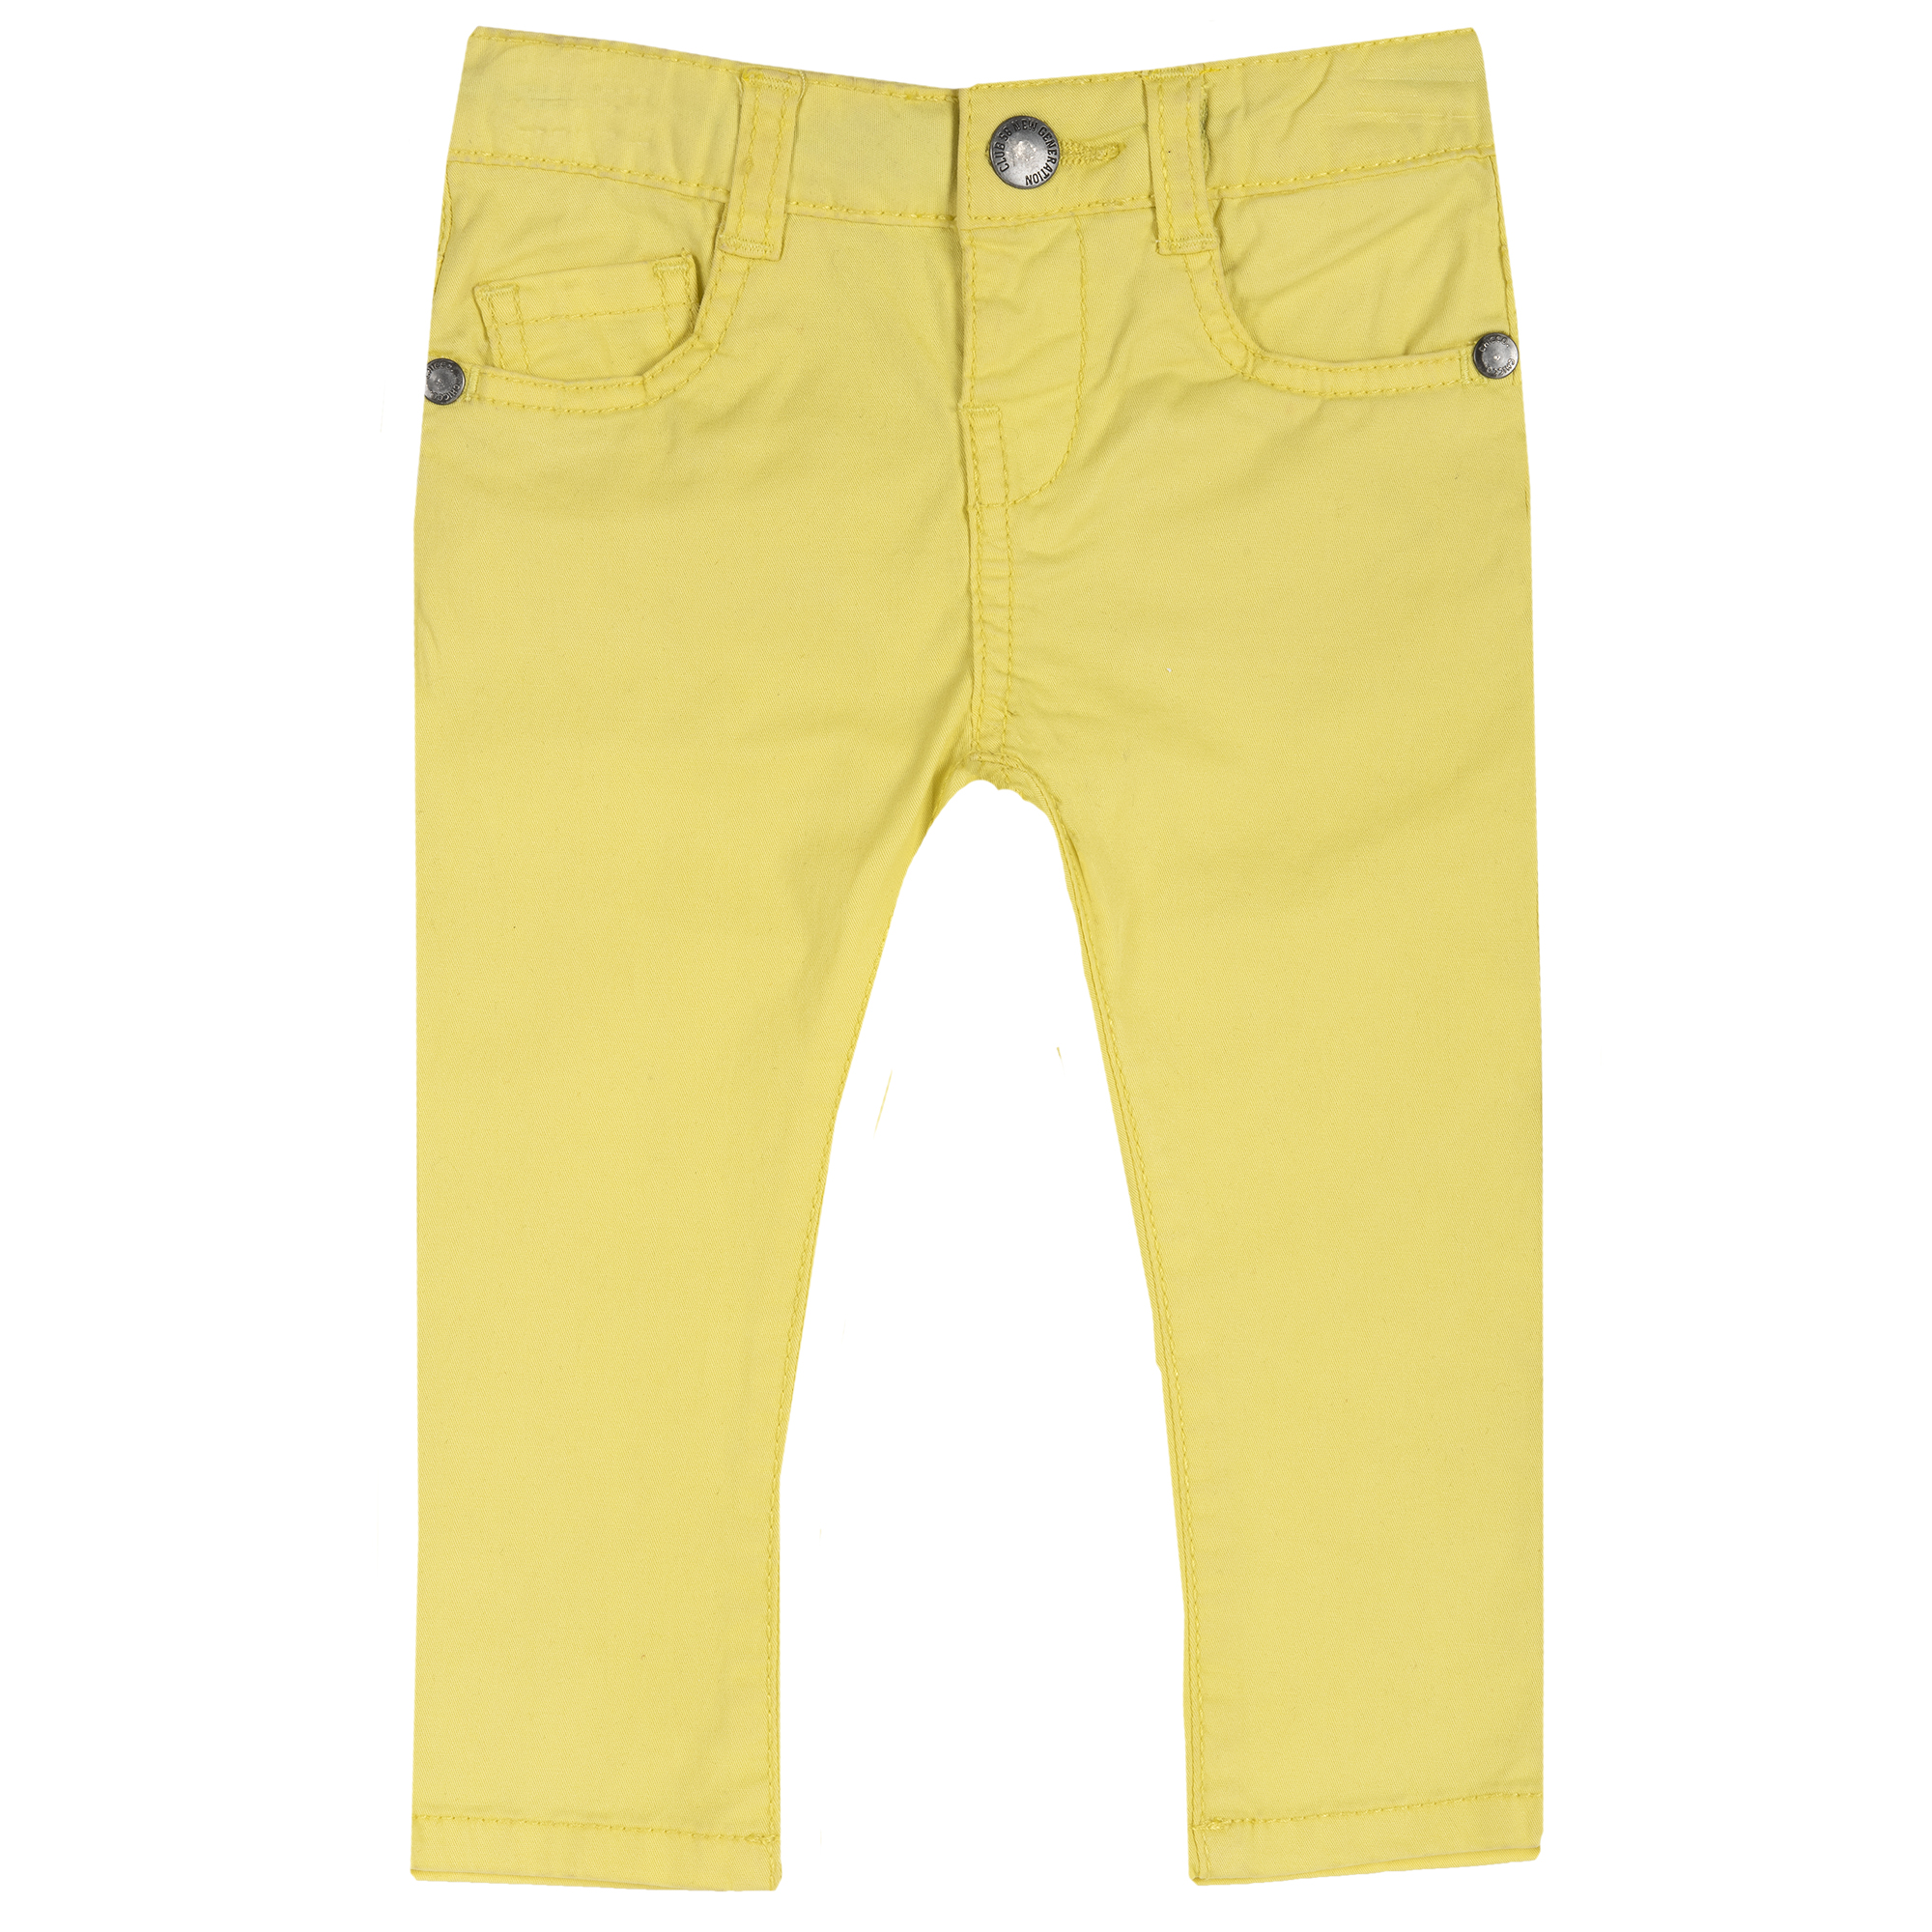 Pantalon lung copii Chicco galben